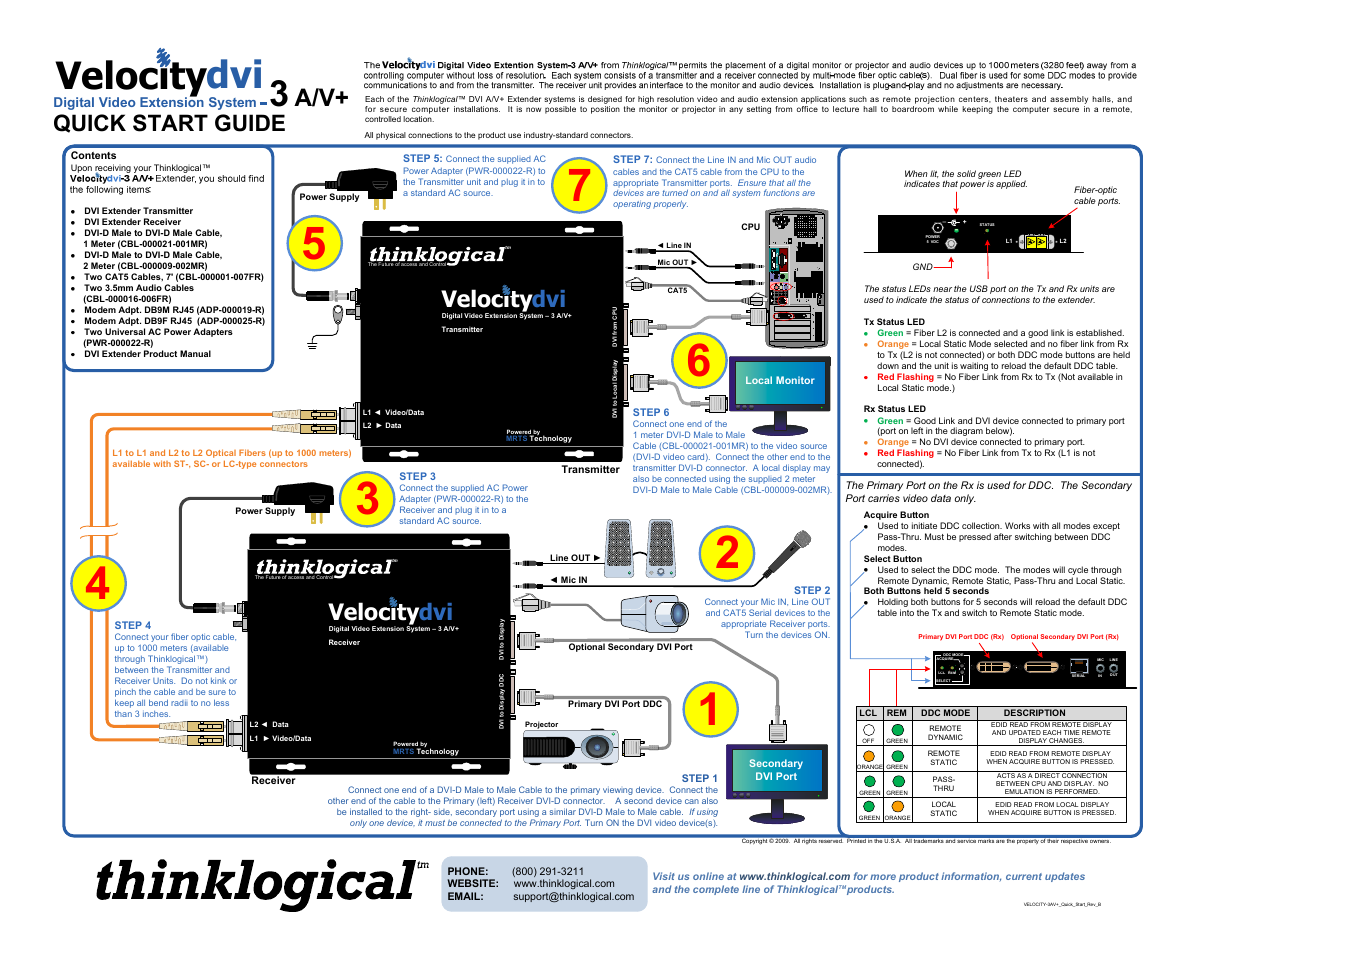 Velocitydvi System-3 A/V+ Quick Start Guide